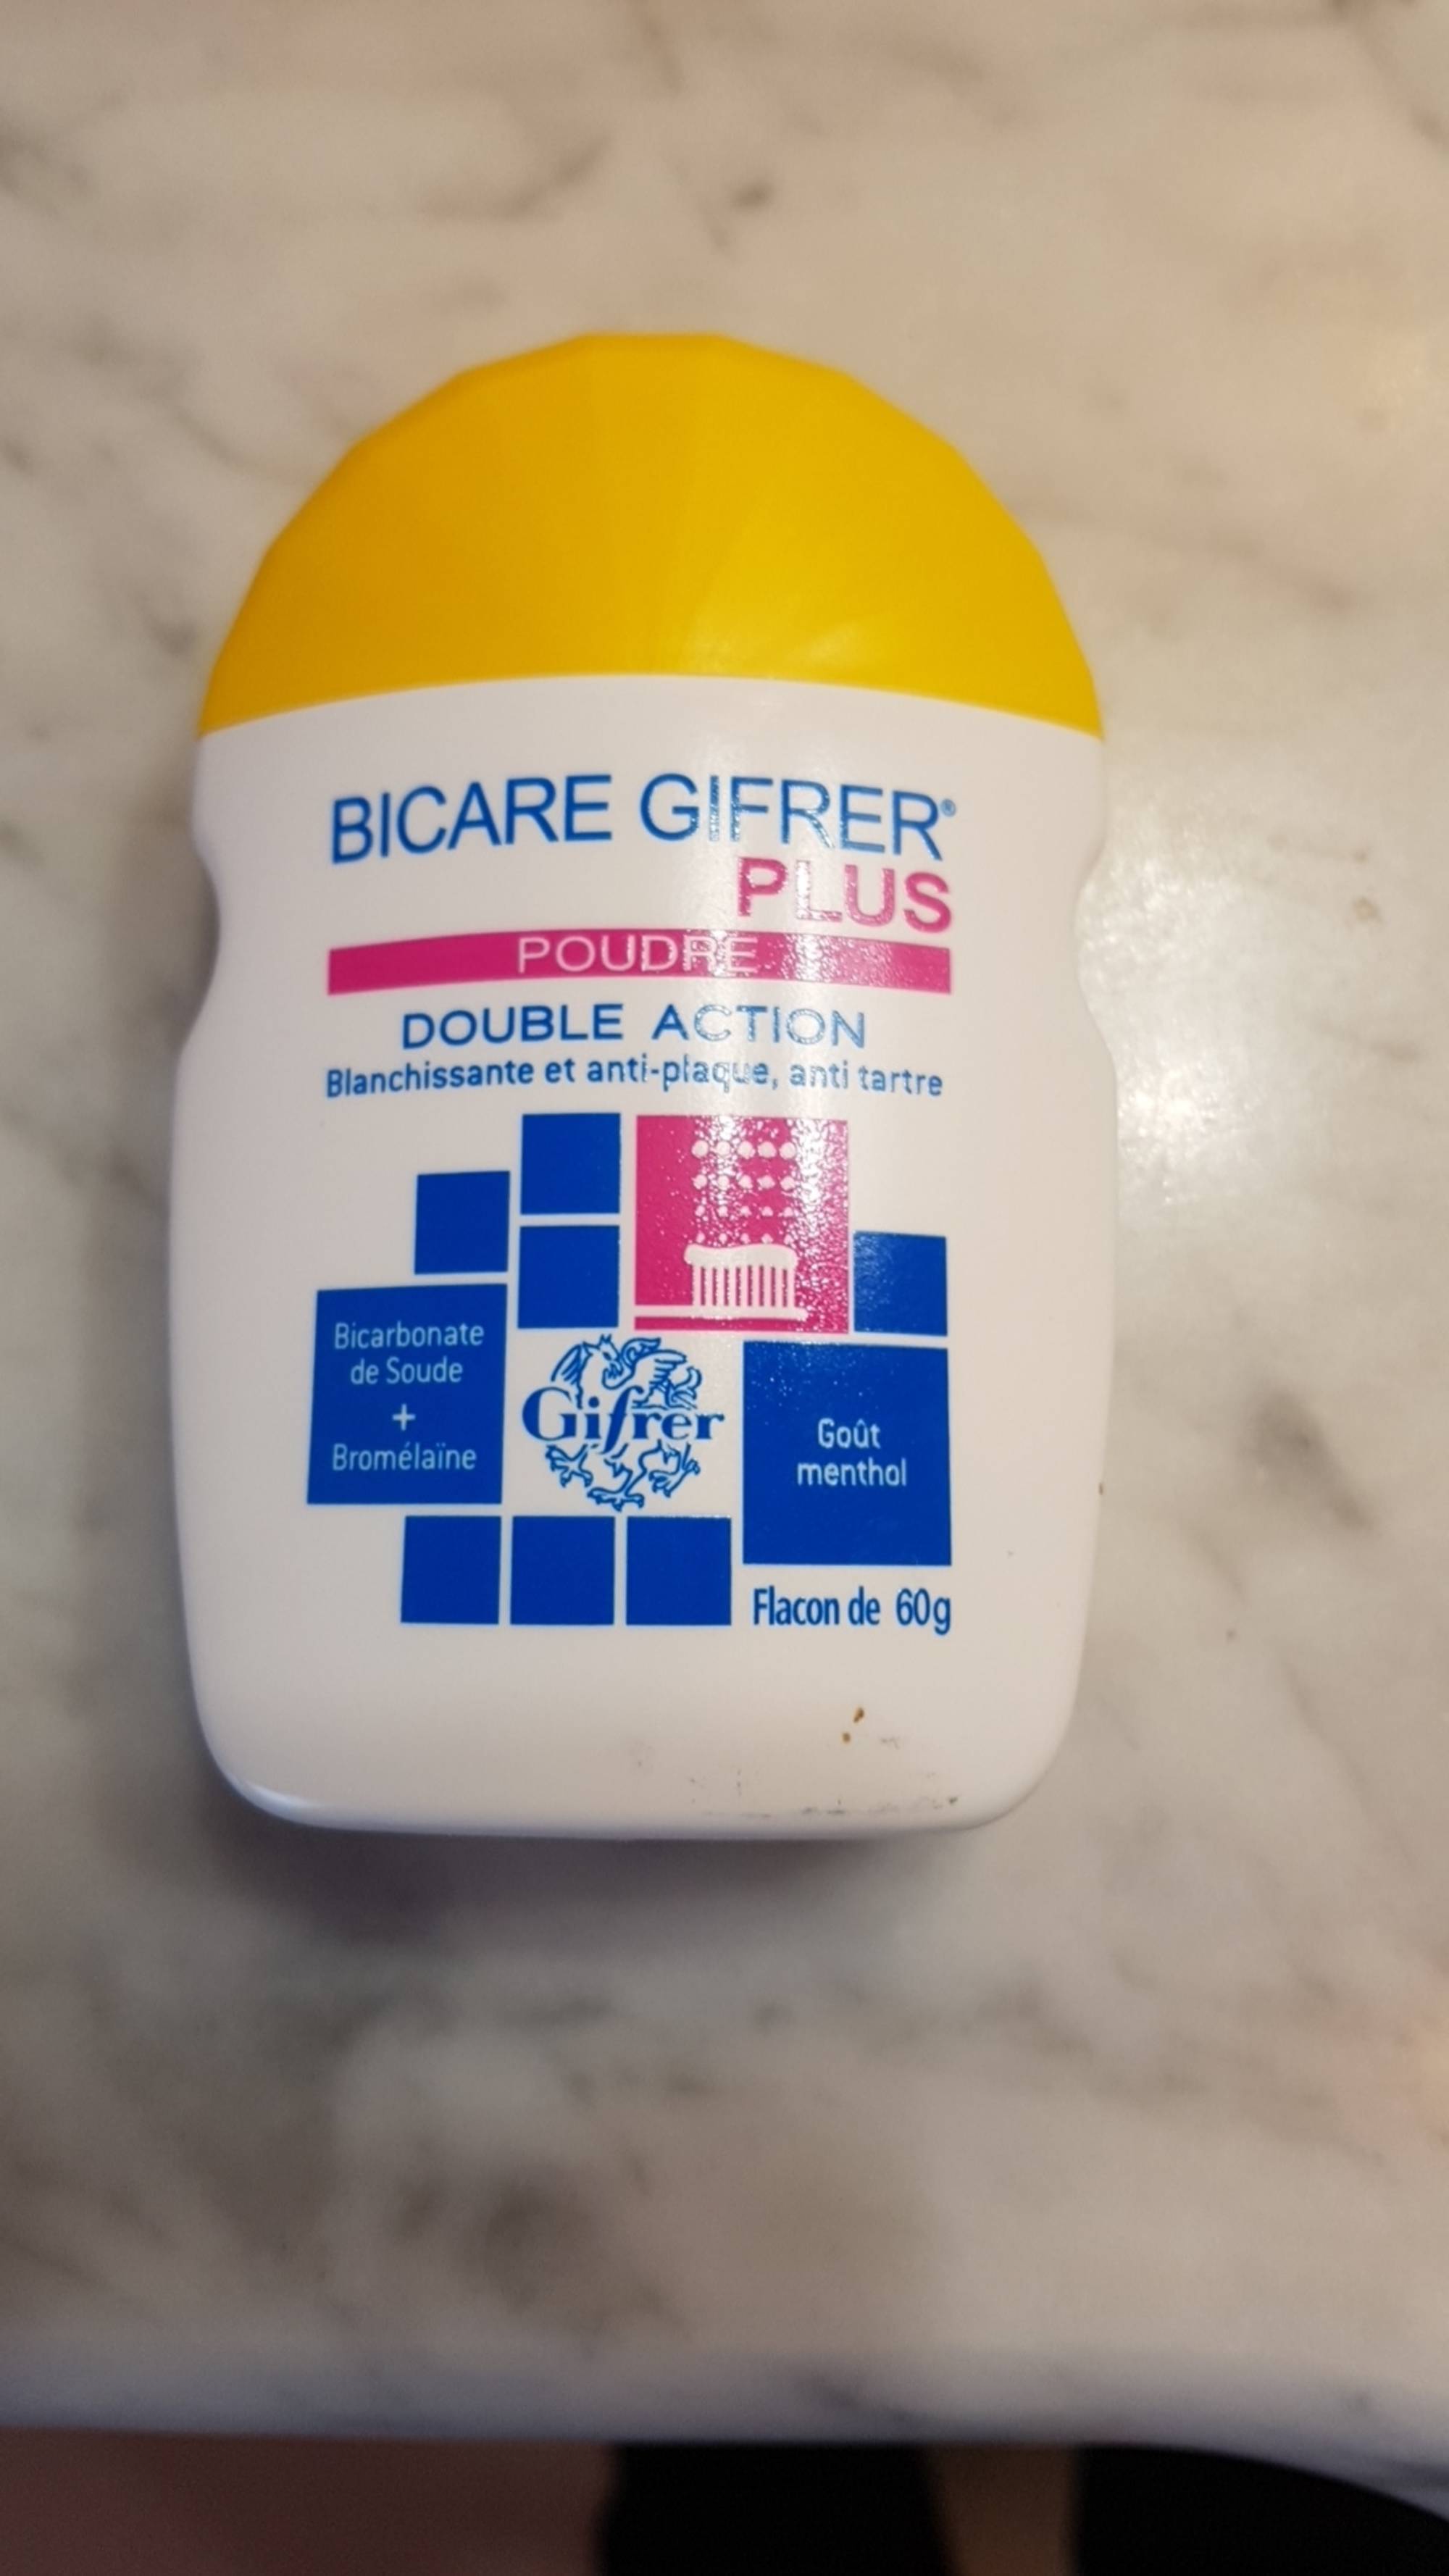 GIFRER - Bicare gifrer plus double action - Poudre